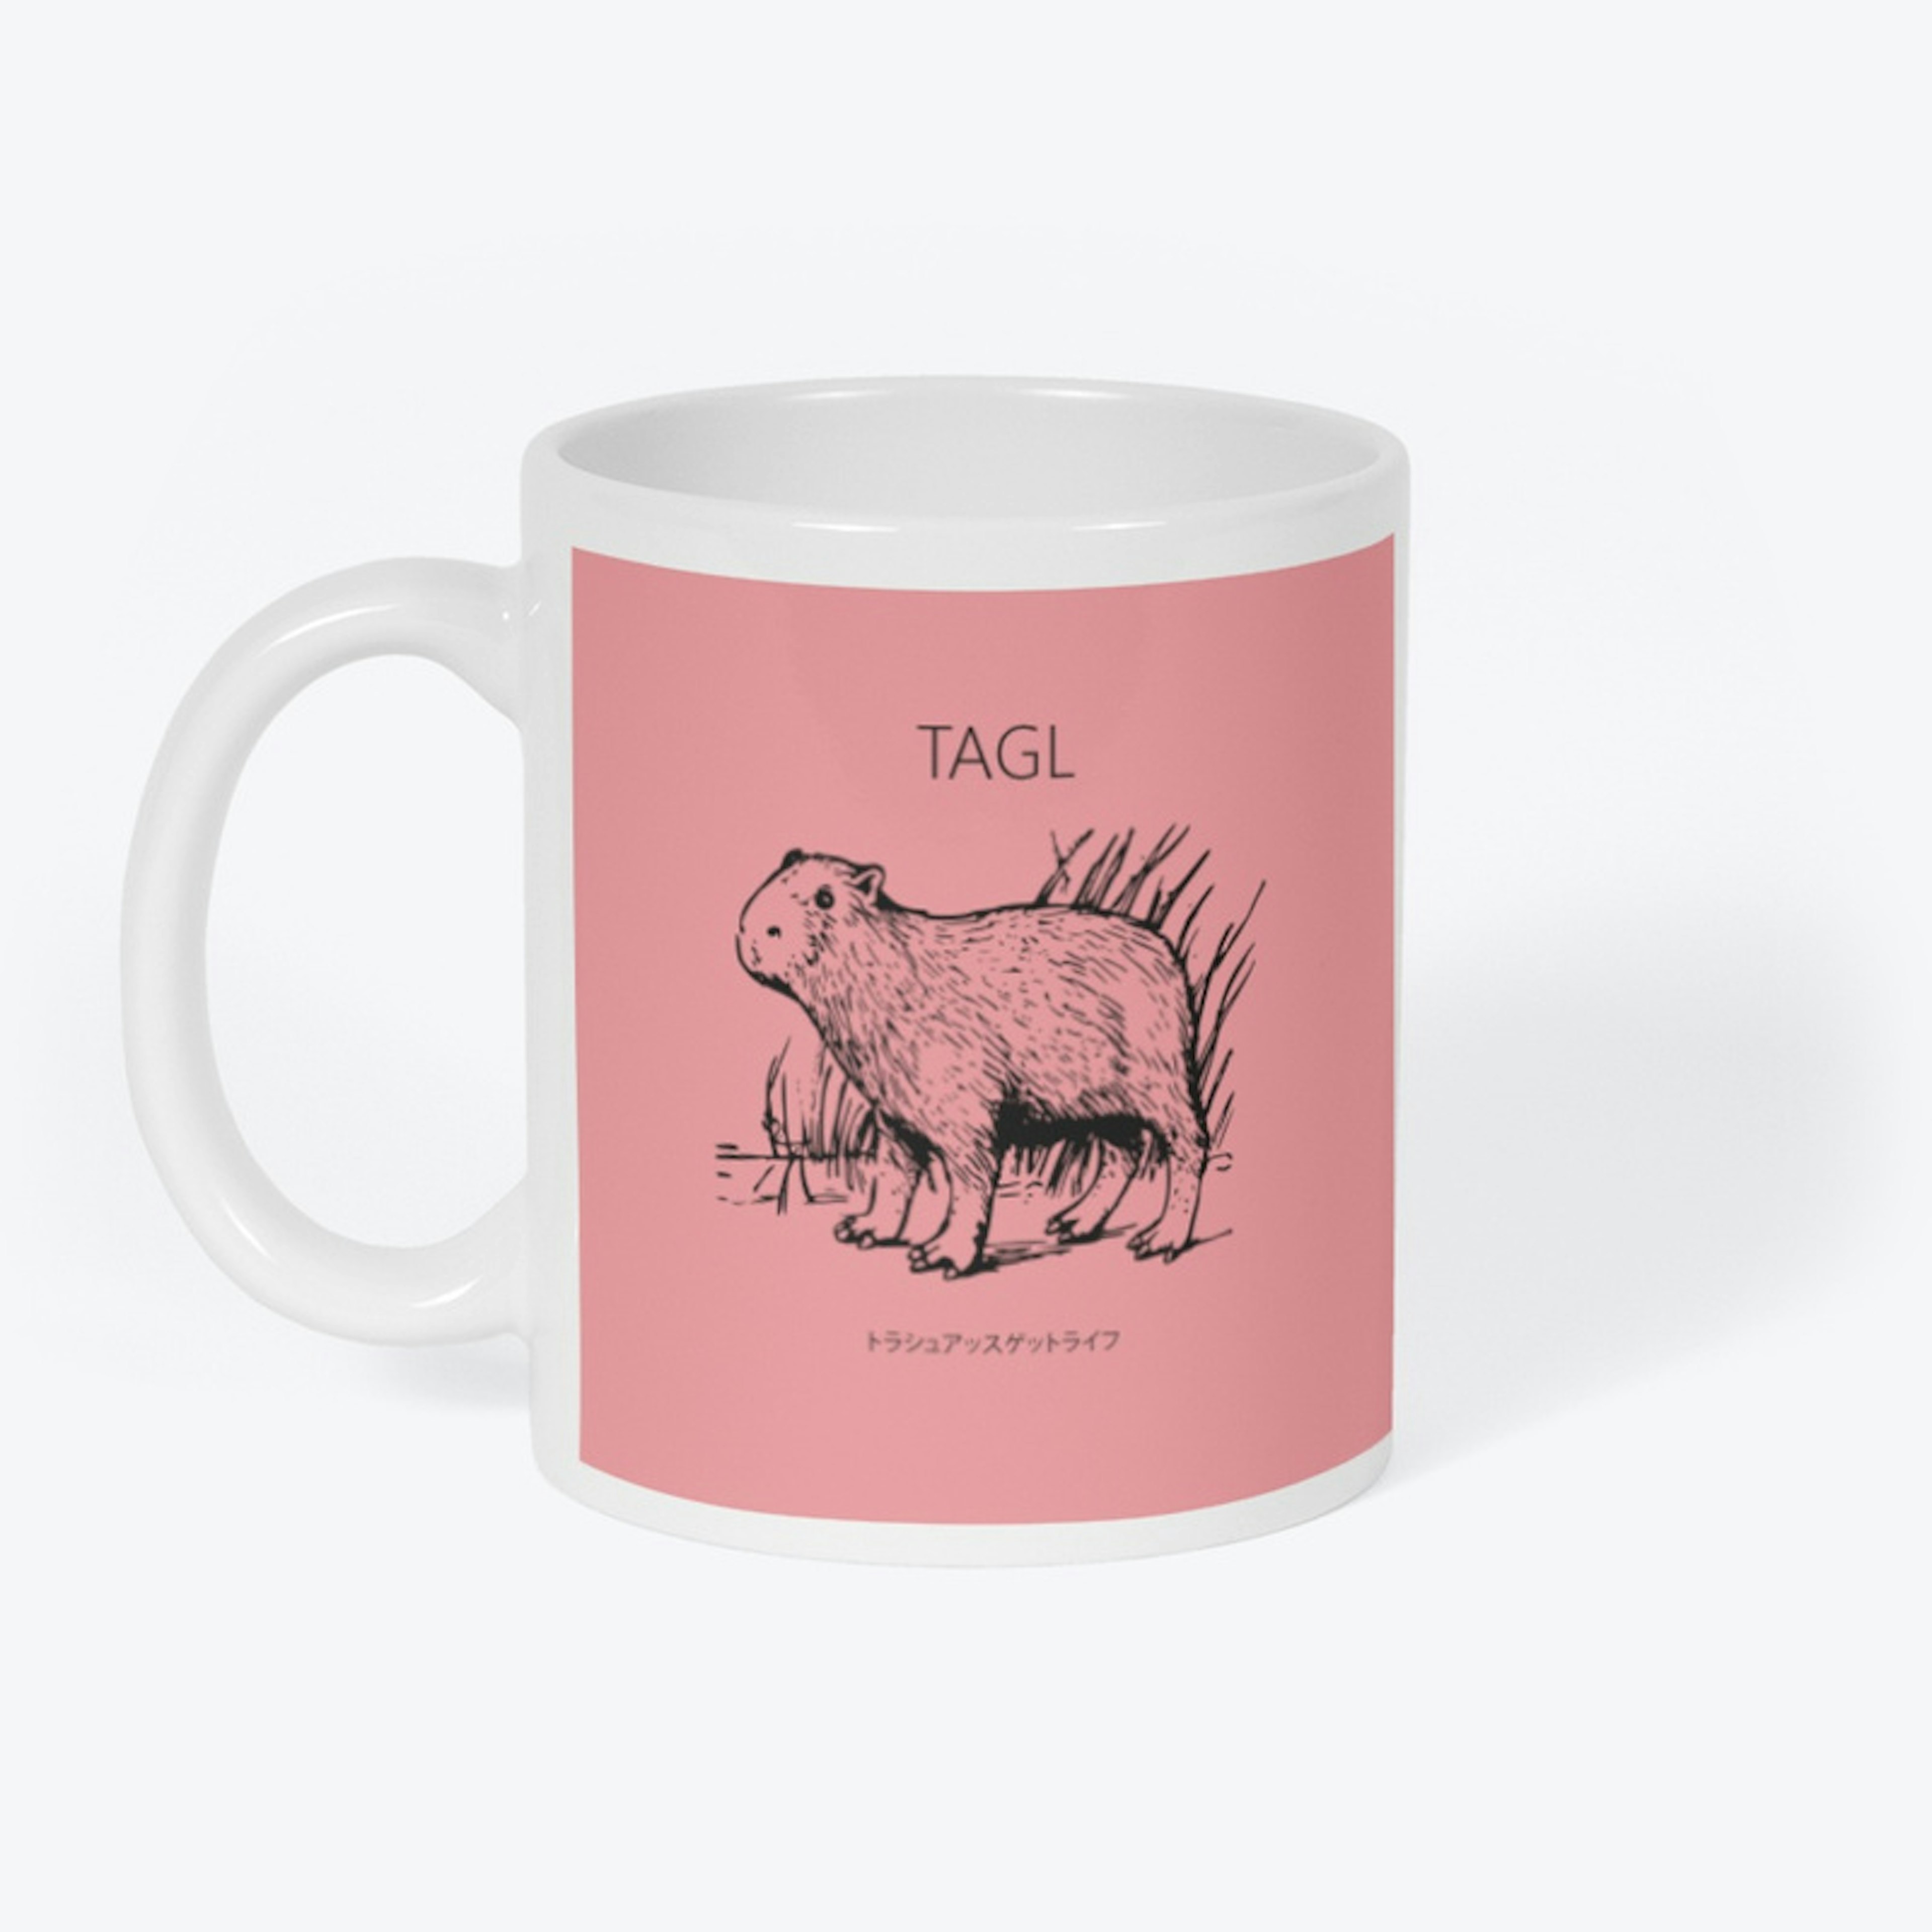 TAGL Mug